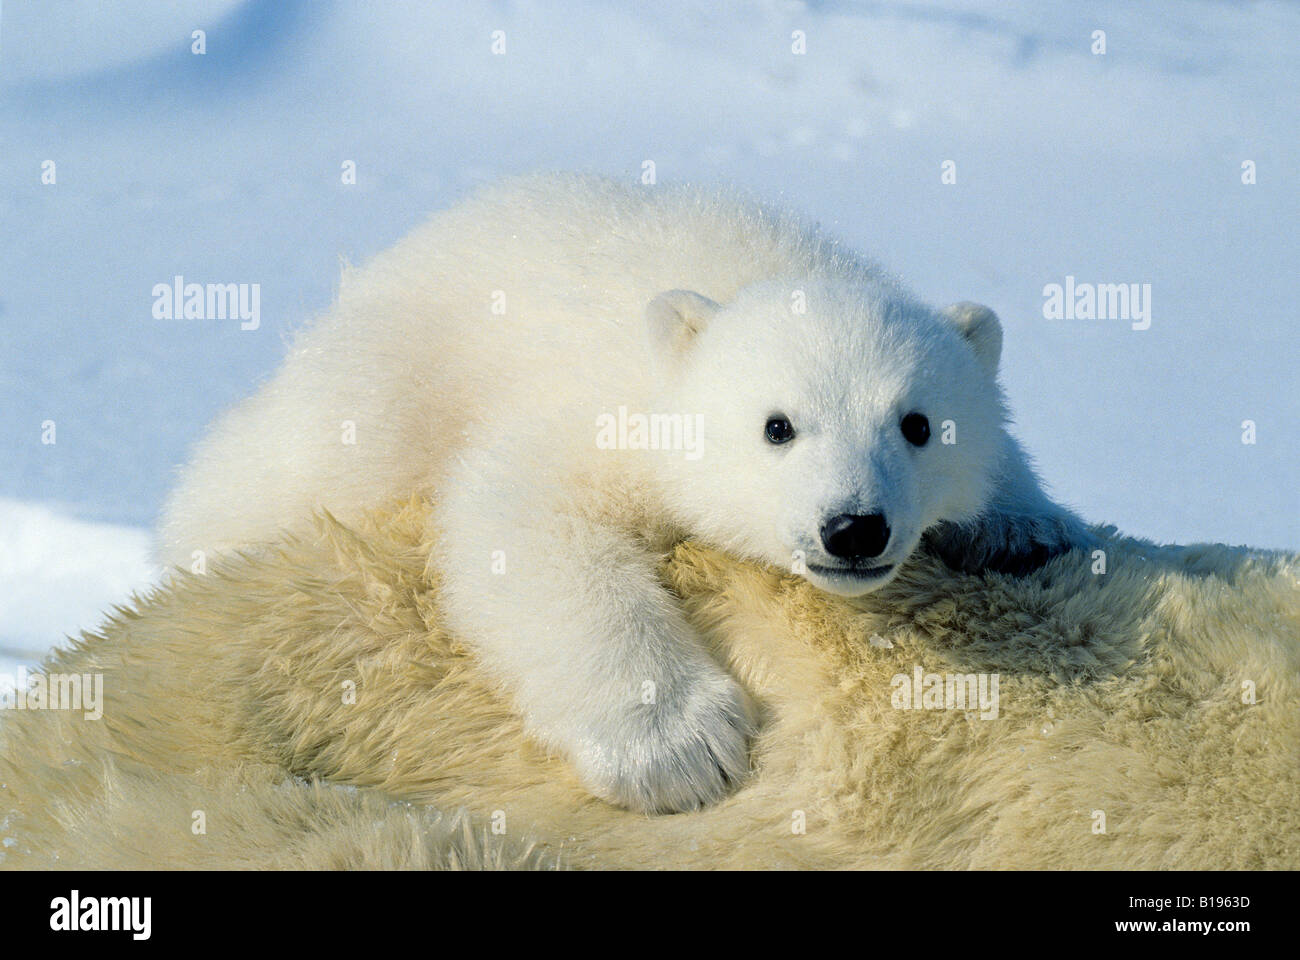 Three-month old polar bear cub (Ursus maritimus) riding on its mother's back, Arctic Canada. Stock Photo